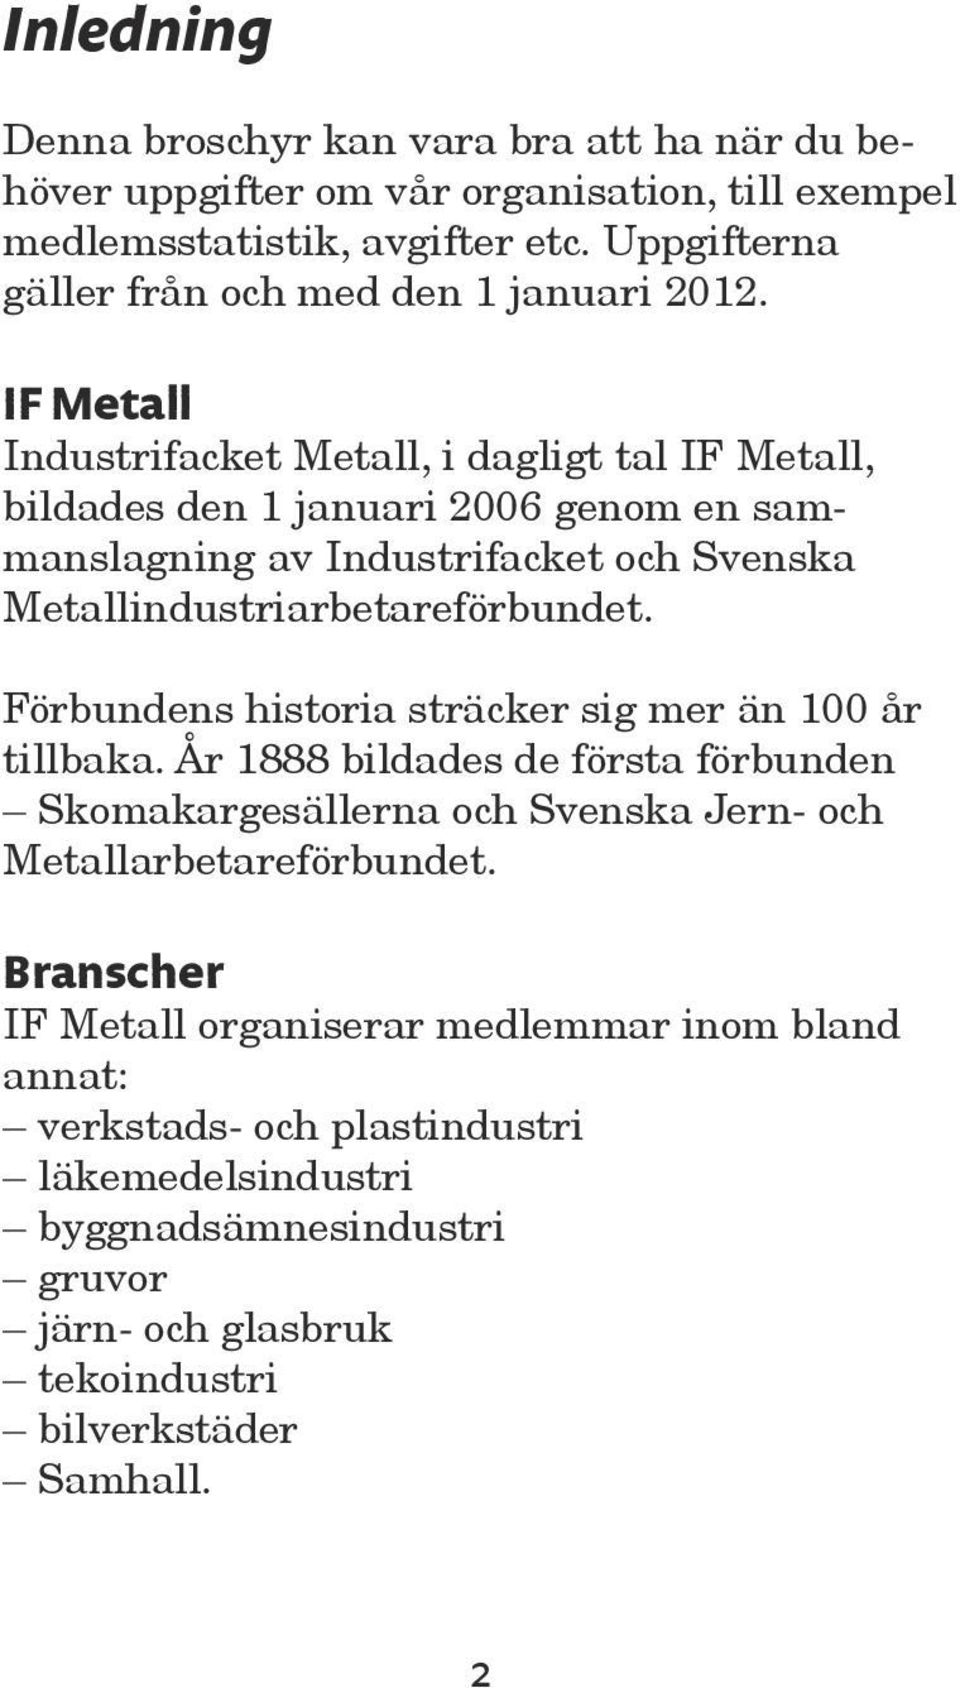 IF Metall Industrifacket Metall, i dagligt tal IF Metall, bildades den 1 januari 2006 genom en sammanslagning av Industrifacket och Svenska Metallindustriarbetareförbundet.